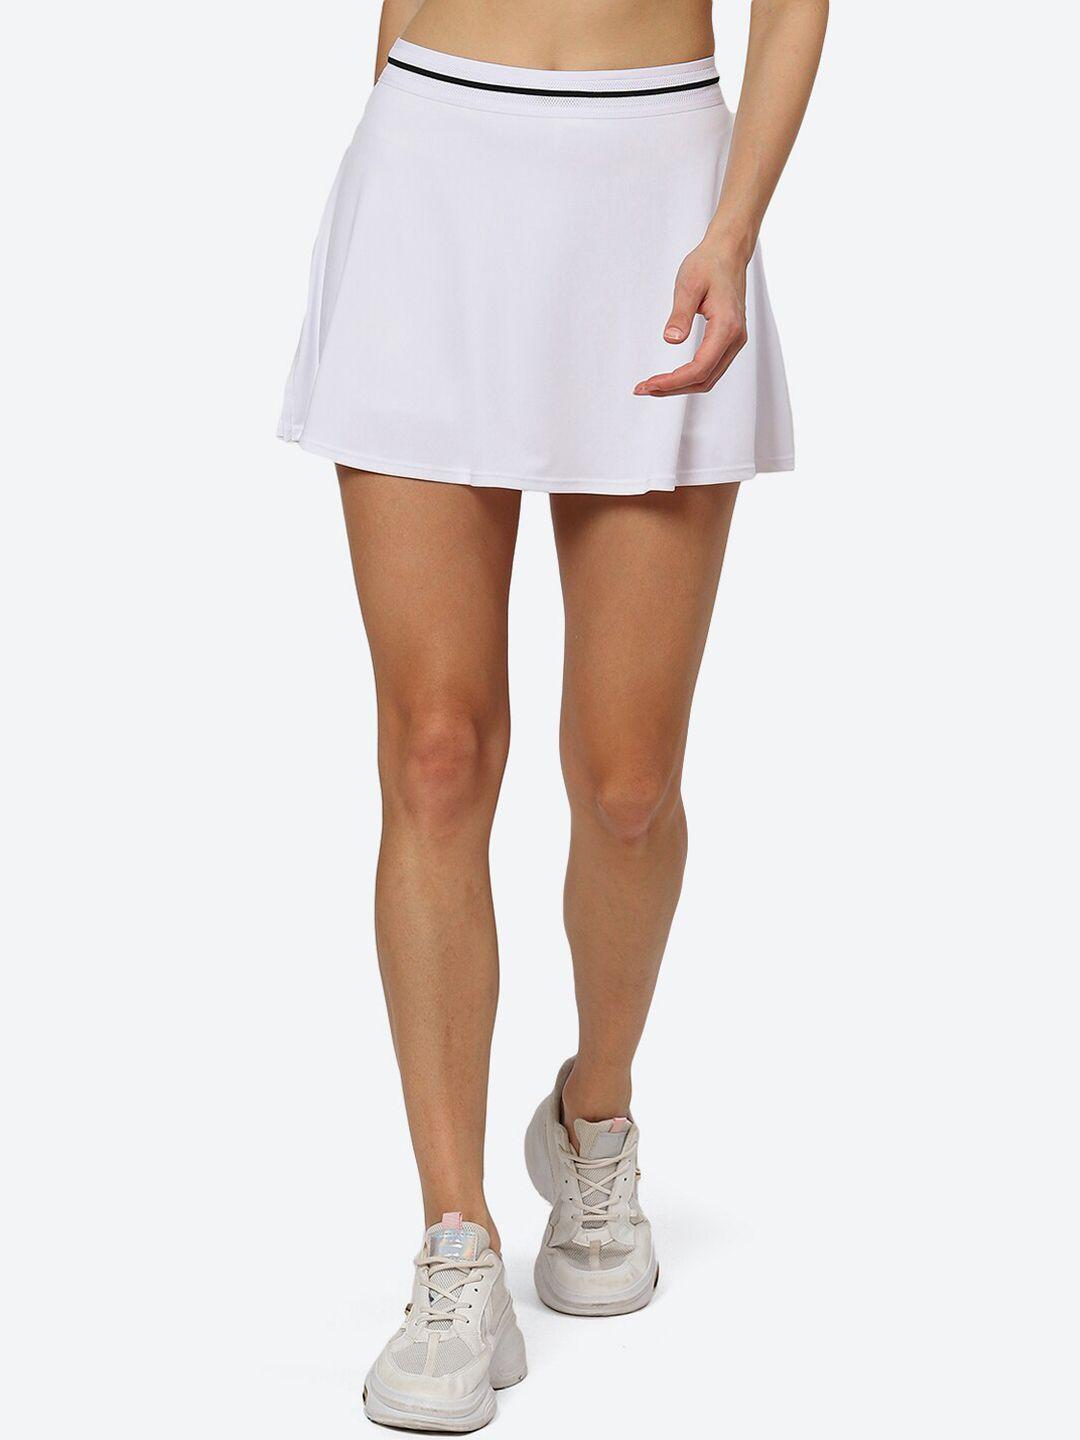 asics-brand-logo-printed-mini-match-skort-skirt